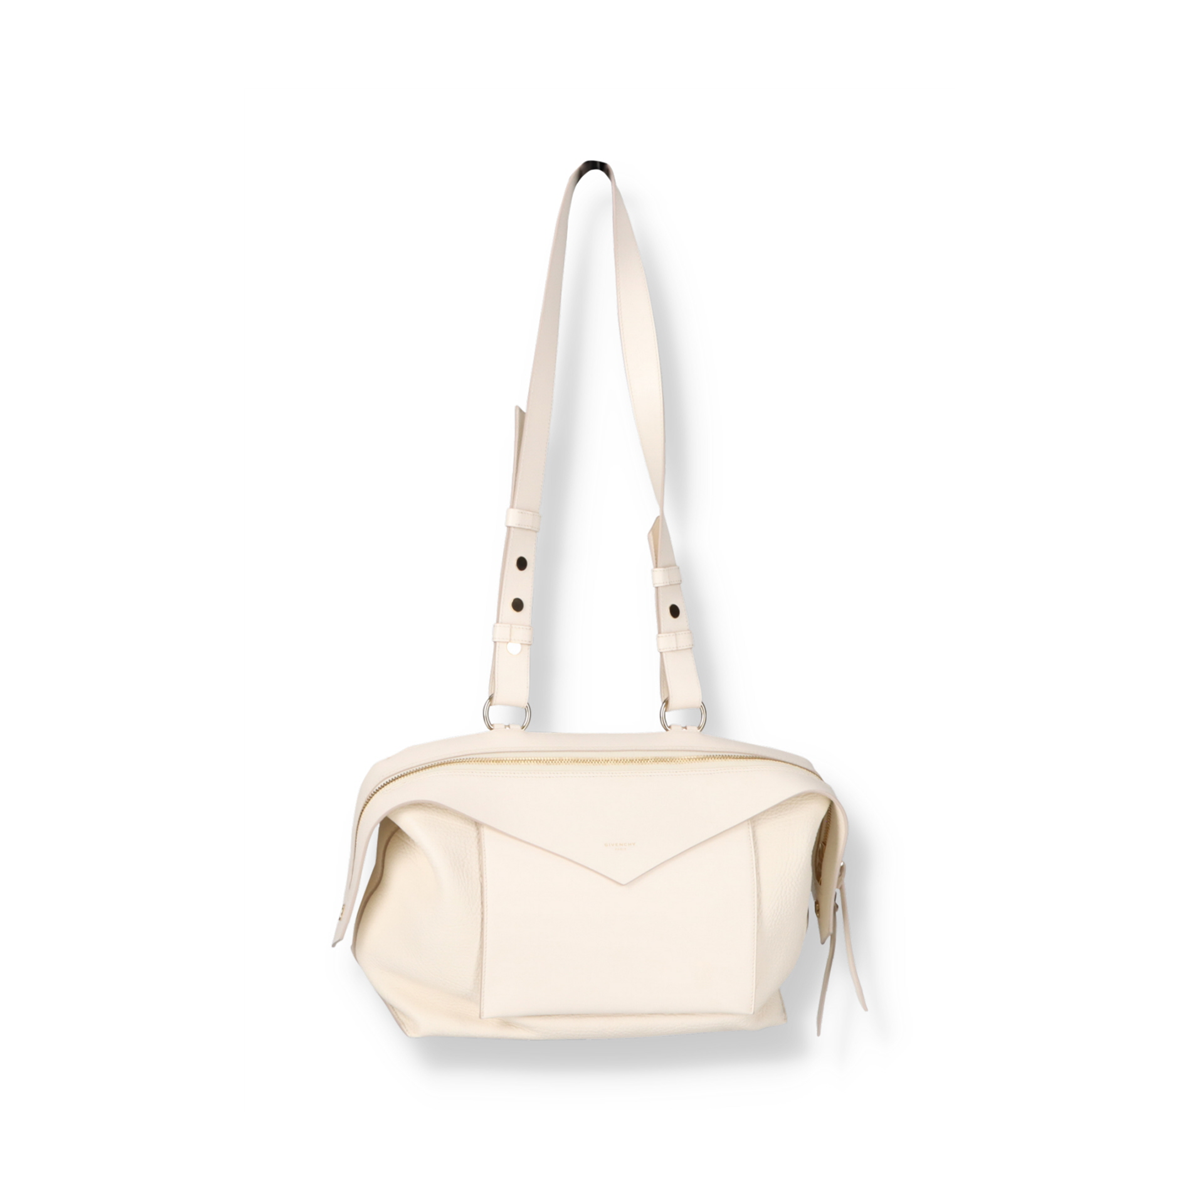 Givenchy asymmetrical bag - Outlet